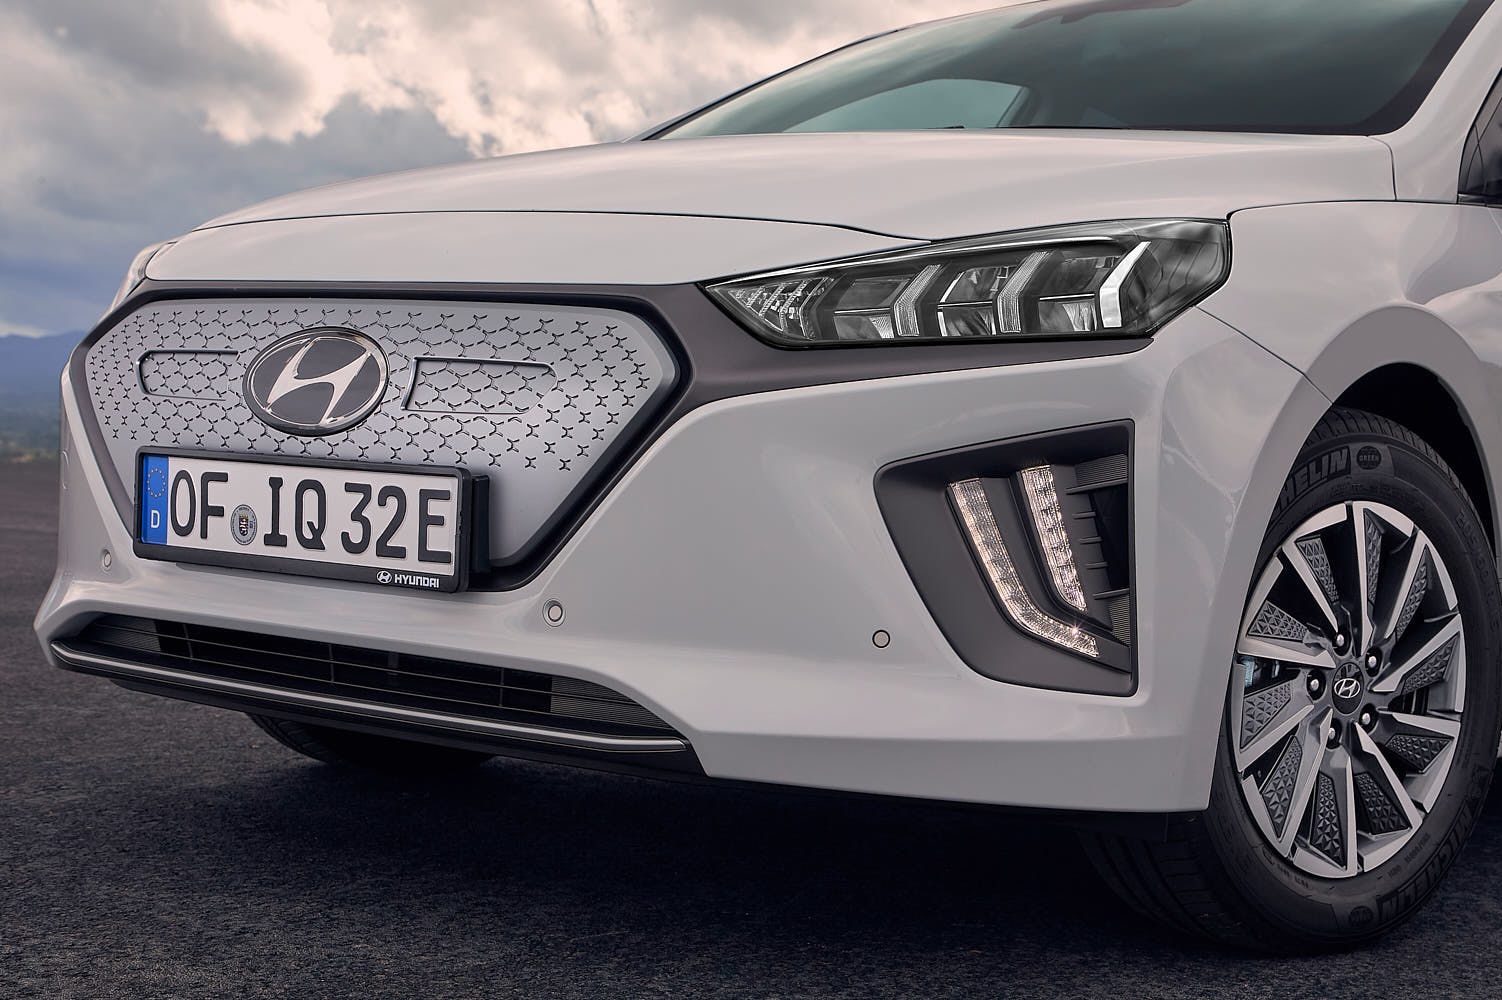 Hyundai Ioniq 2019 Euro-spec